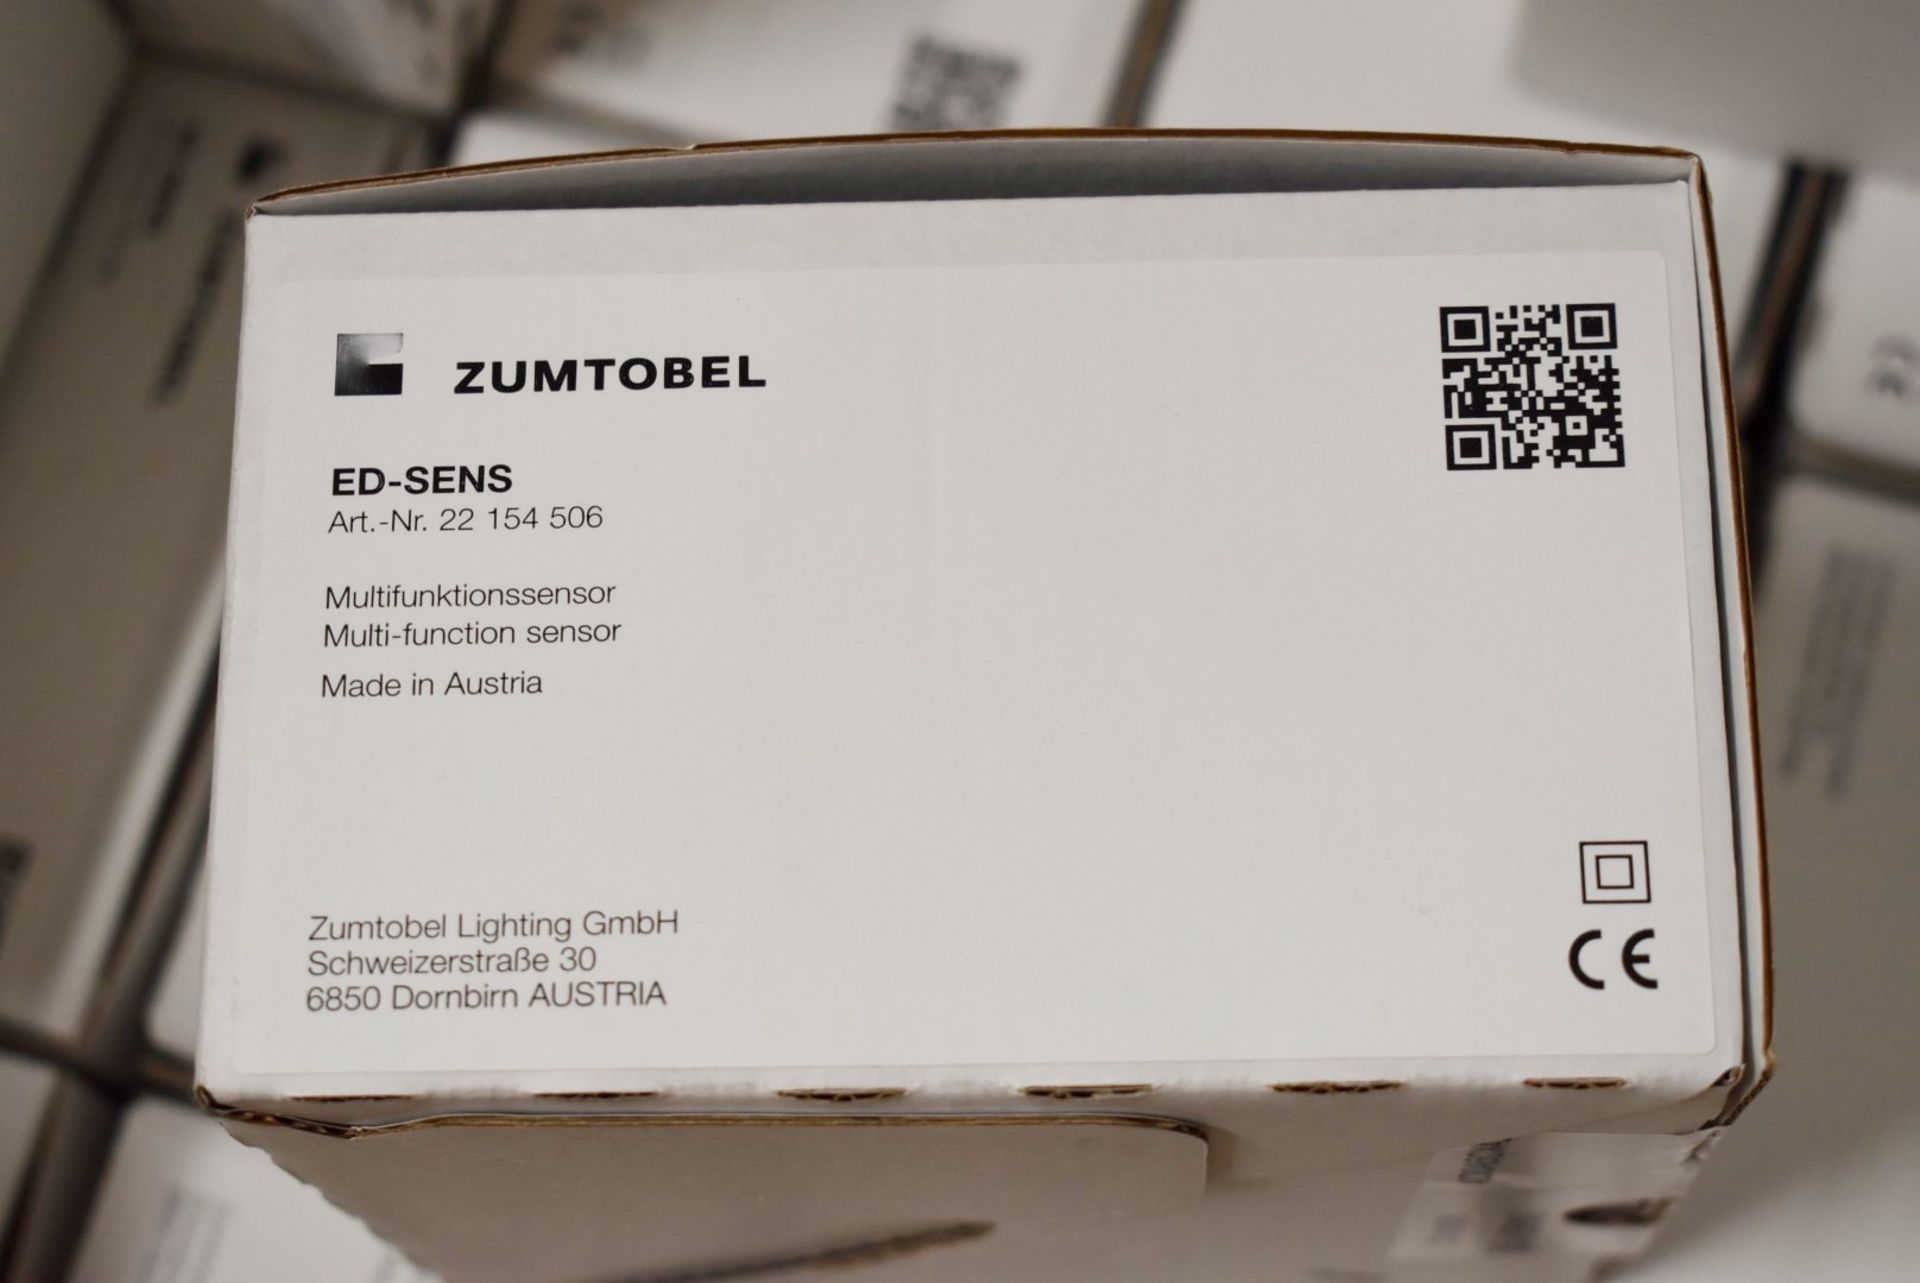 10 x Zumtobel ED-SENS Movement Multisensors - Product Code: 22154506 - New Boxed Stock - RRP £900 - Image 2 of 5